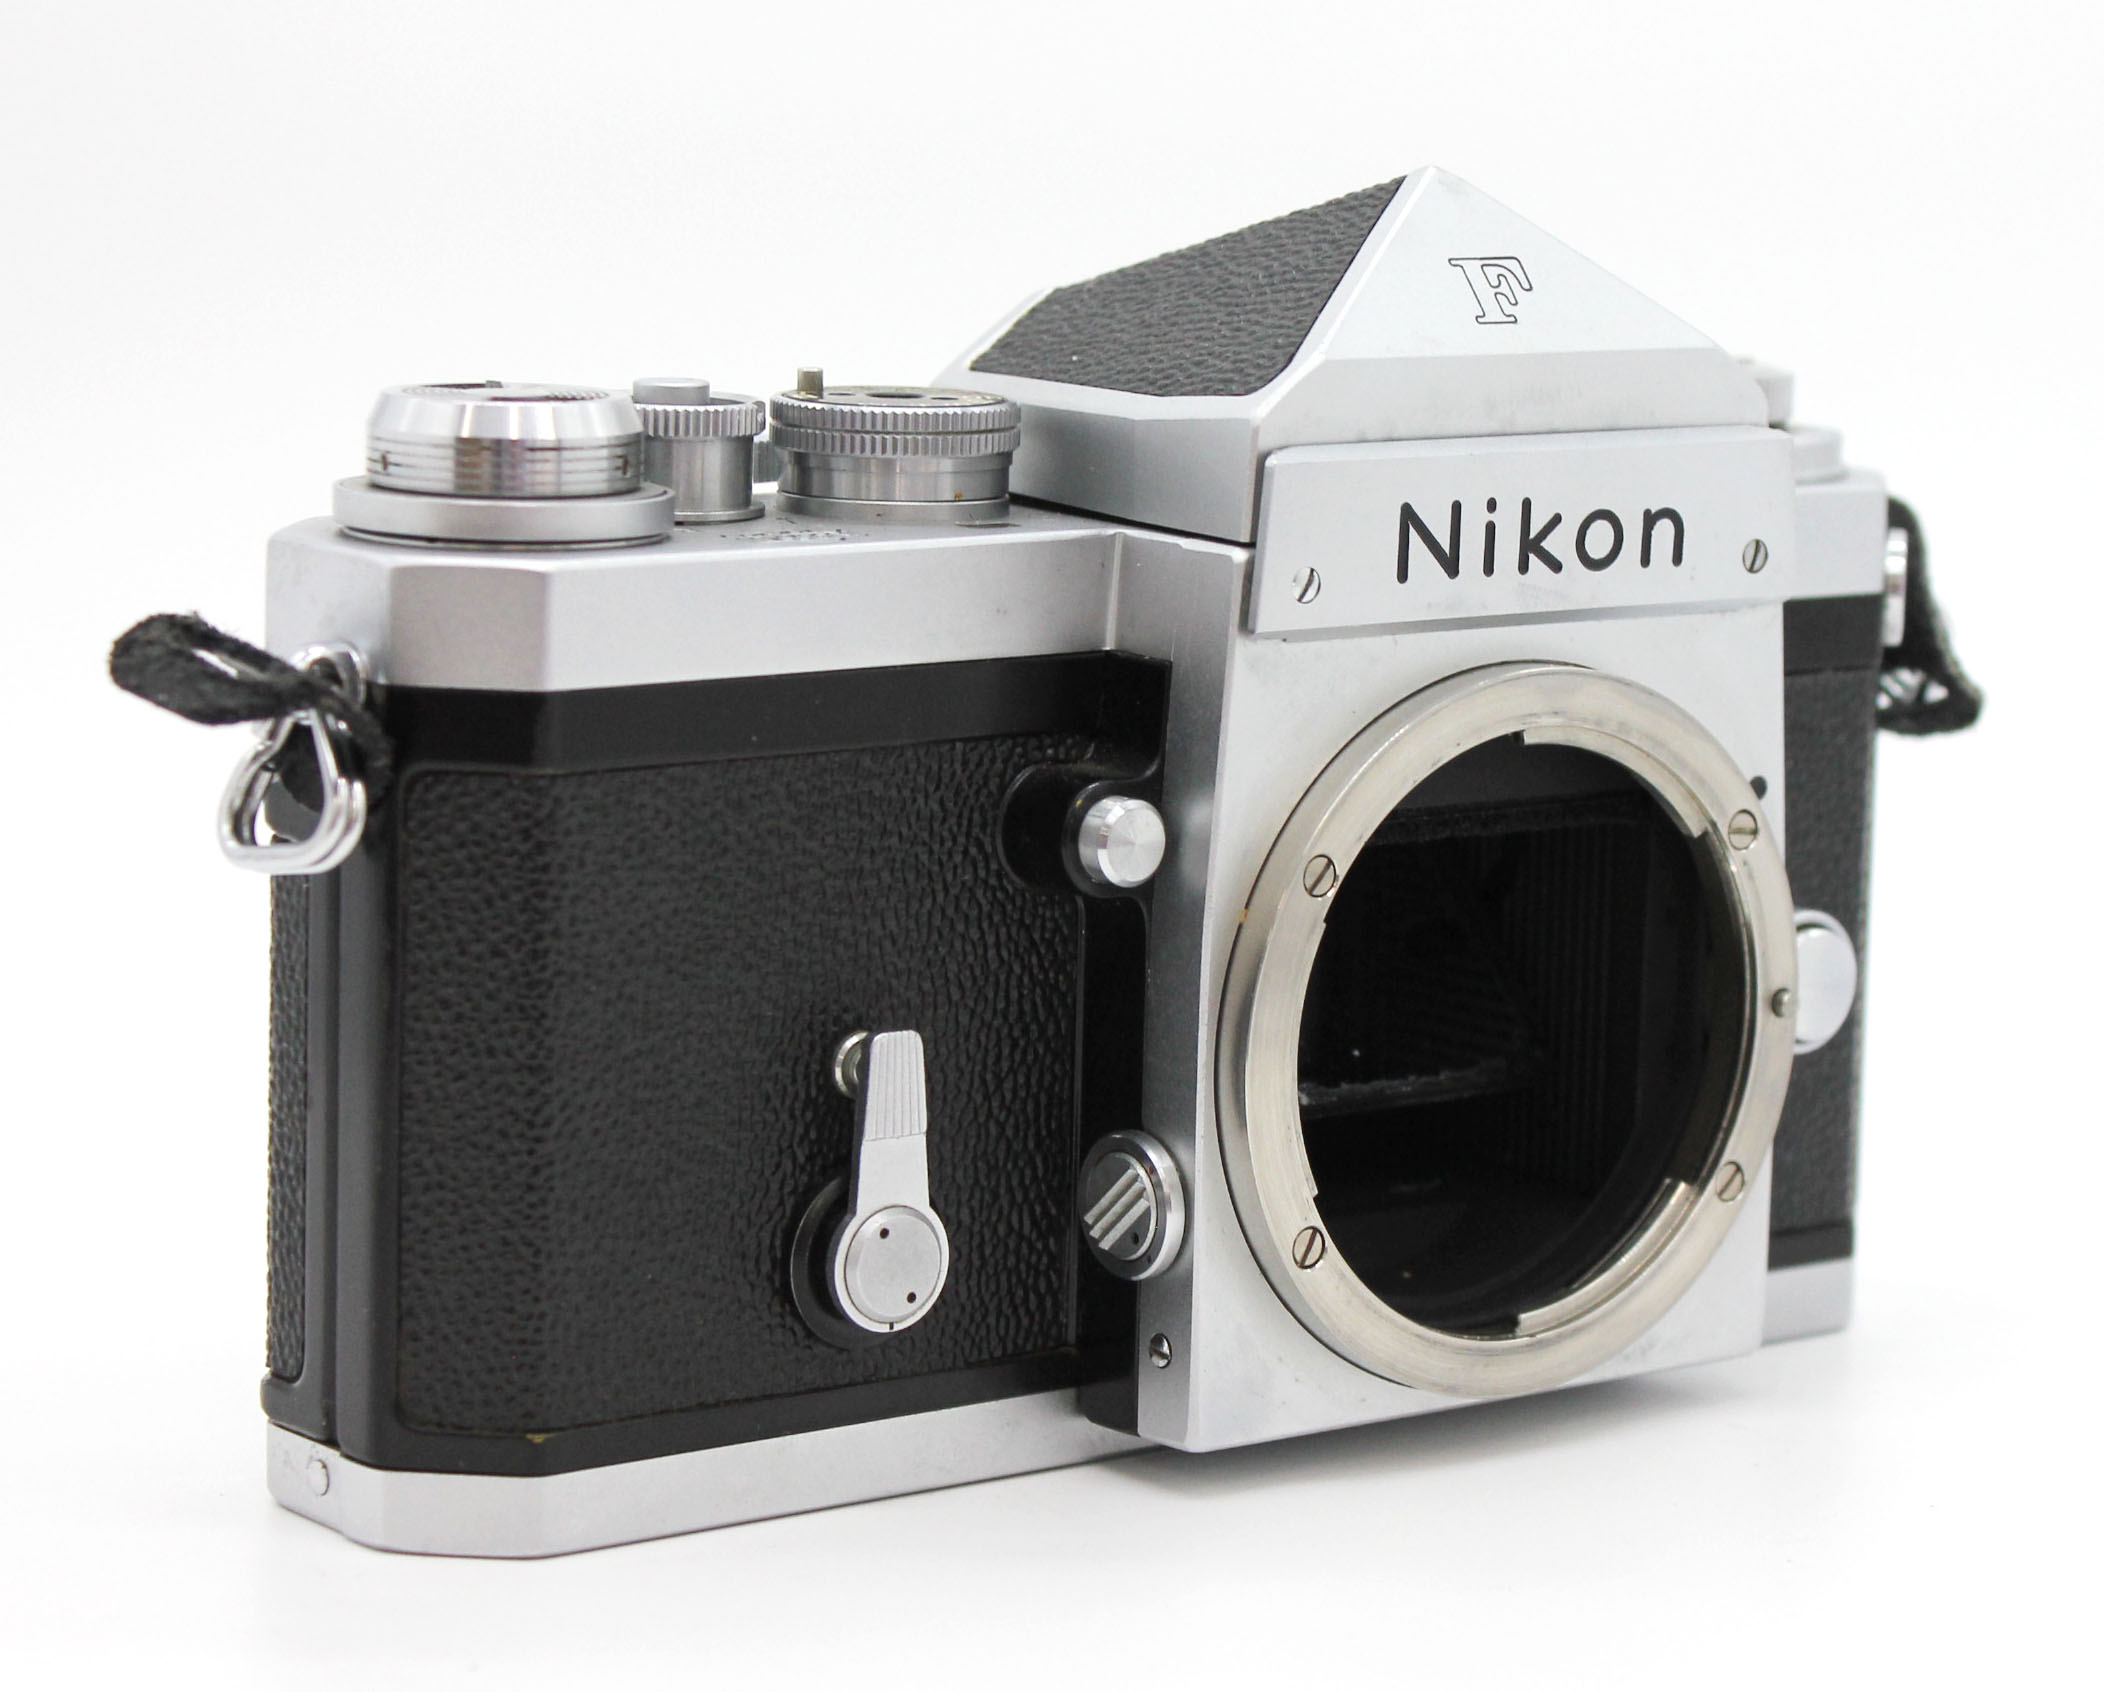  Nikon F Eye Level 35mm SLR Film Camera Photo 1